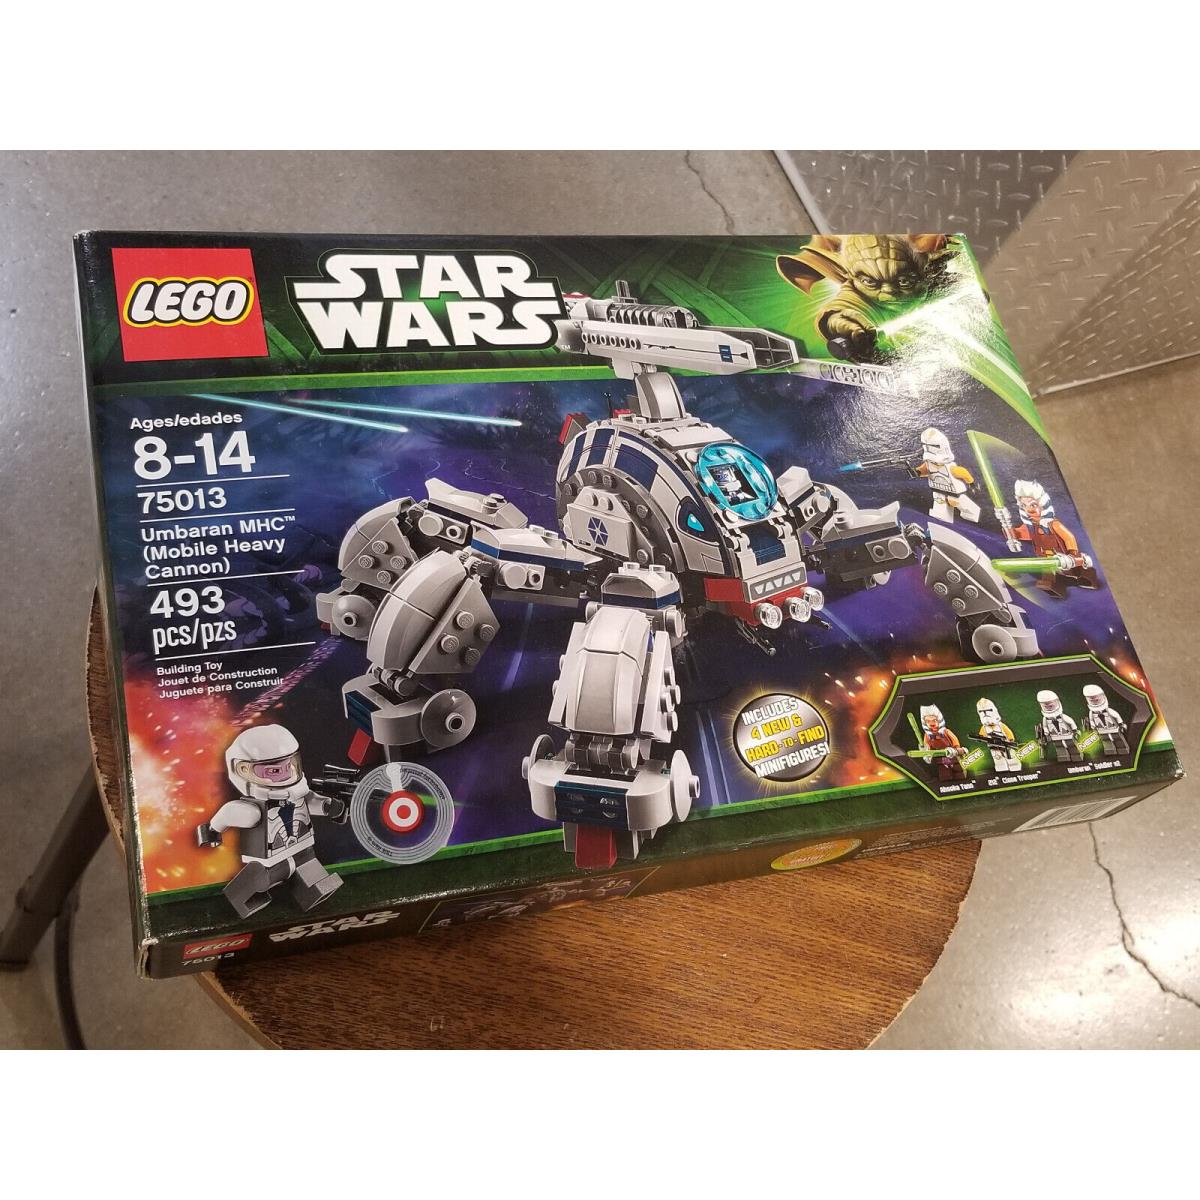 Lego 75013 Star Wars Umbaran Heavy Cannon Minifigures Ahsoka Tano Trooper